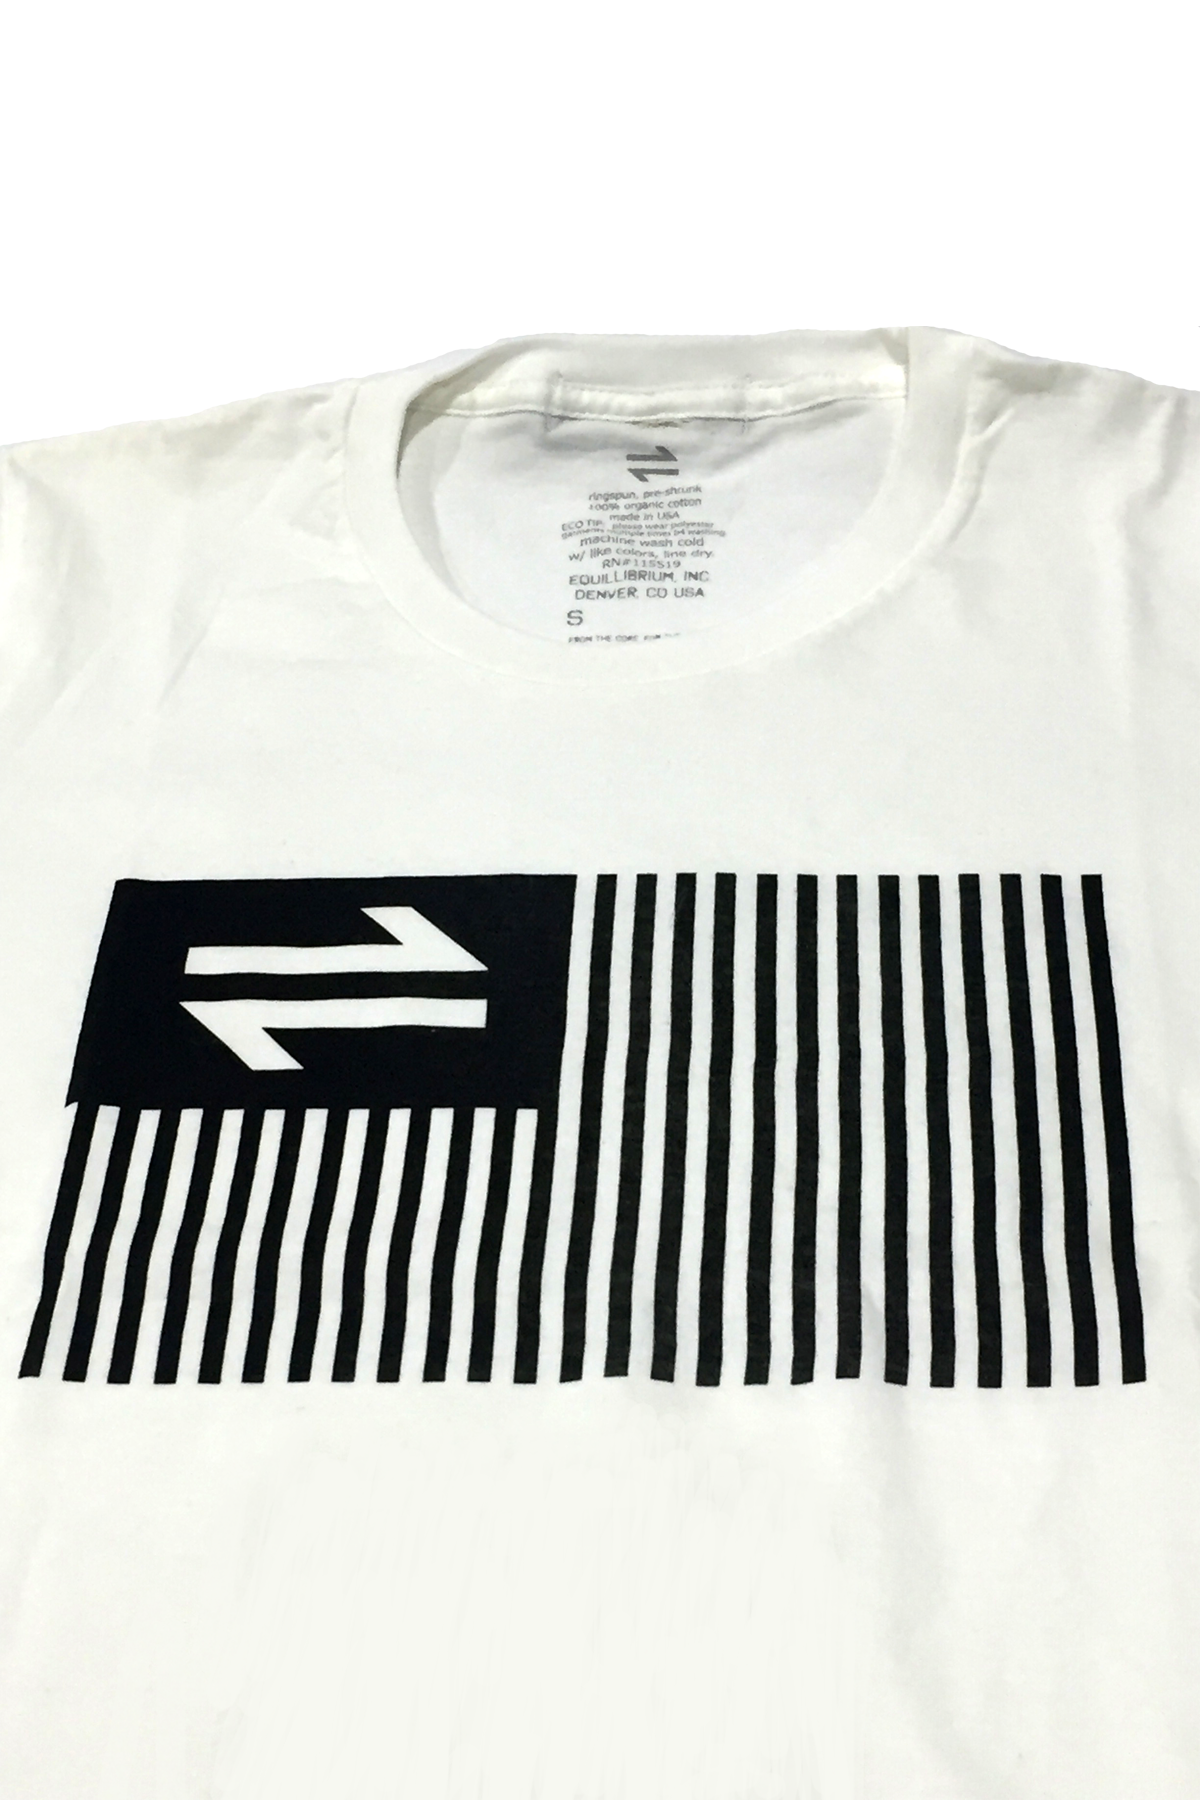 Equillibrium Flag Organic Cotton T-Shirt (Women)